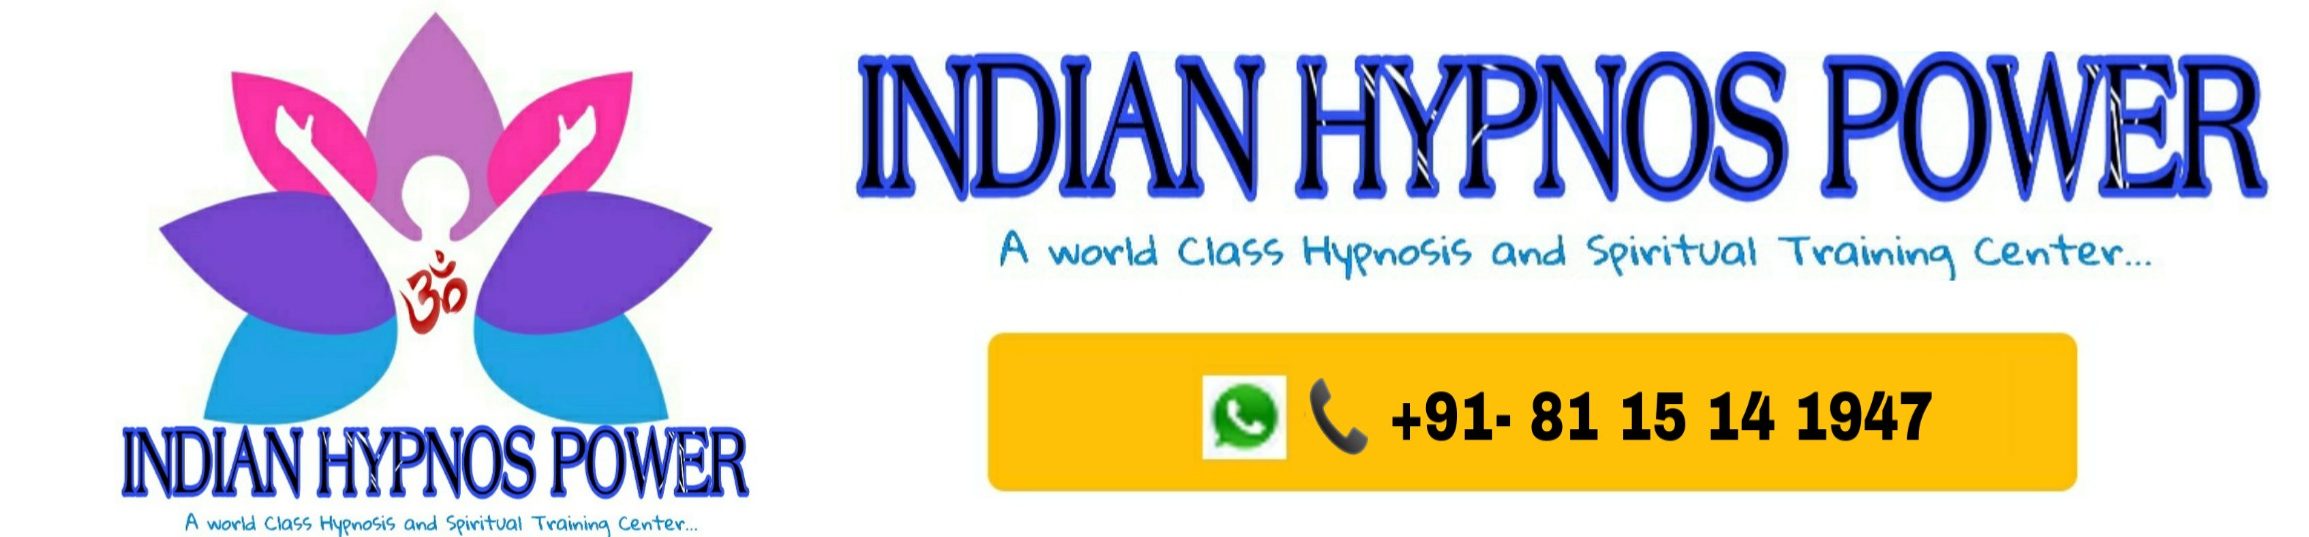 IndianHypnosPower। Hypnosis & Spiritual Training Center ...